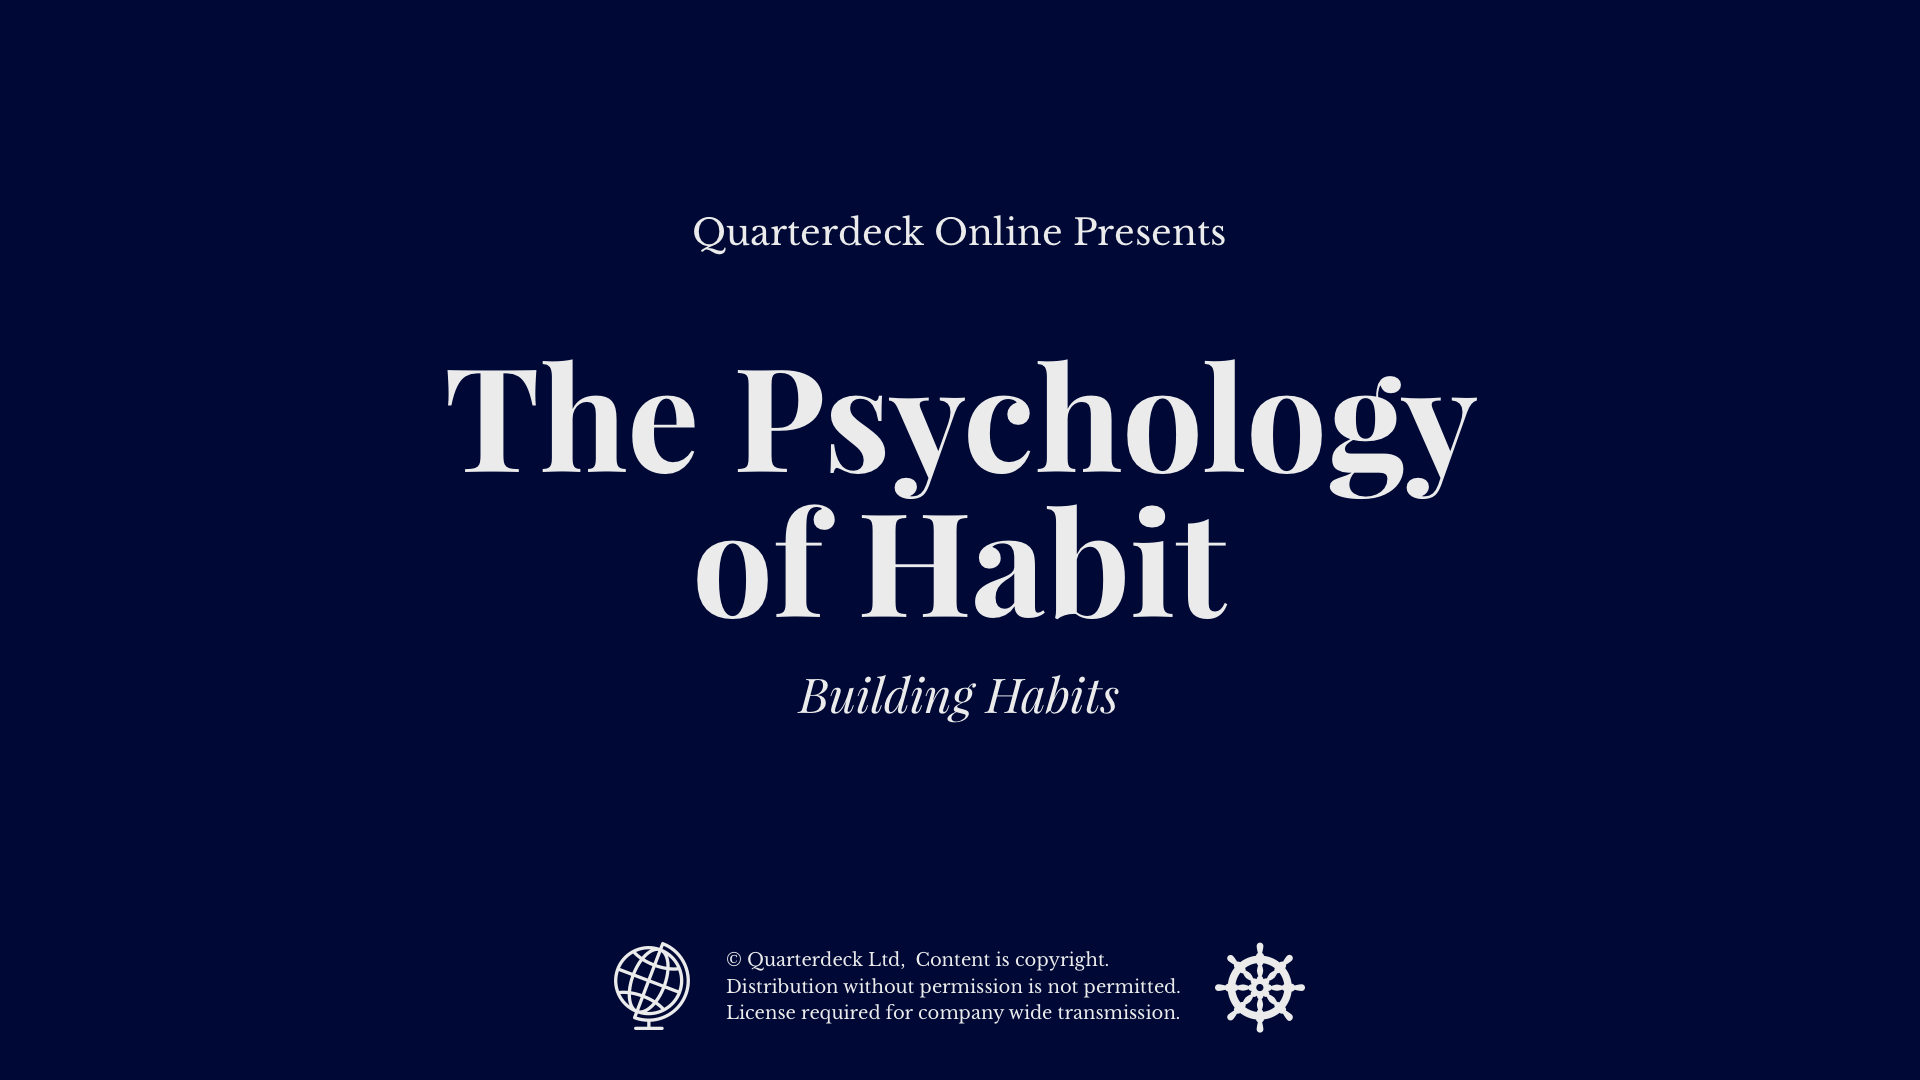 define habits in psychology